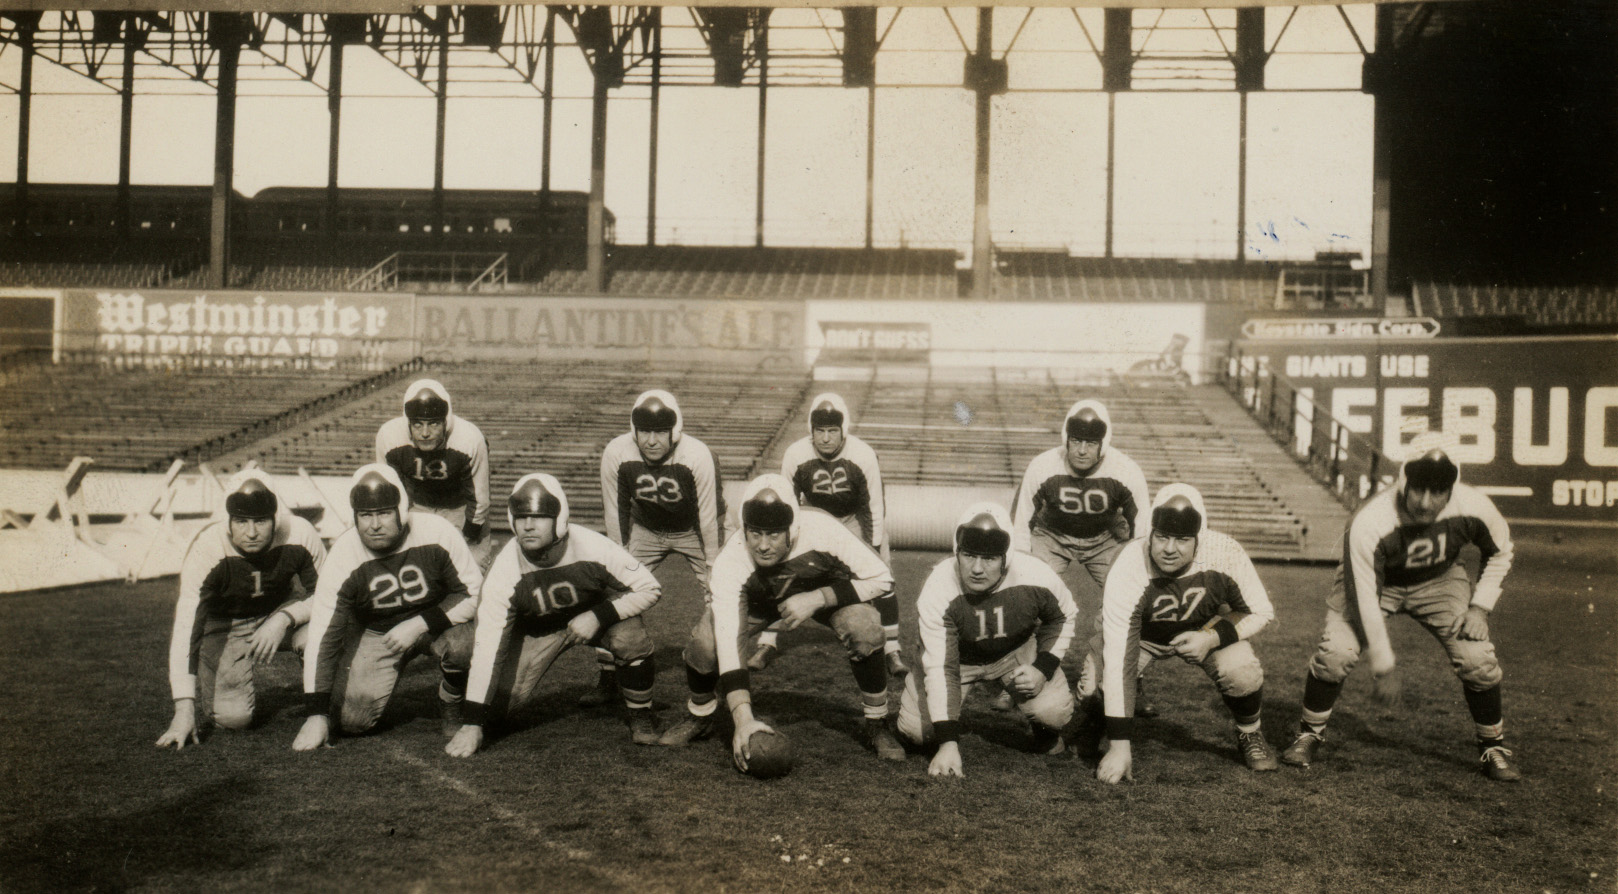 The 1934 New York Football Giants starting 11.